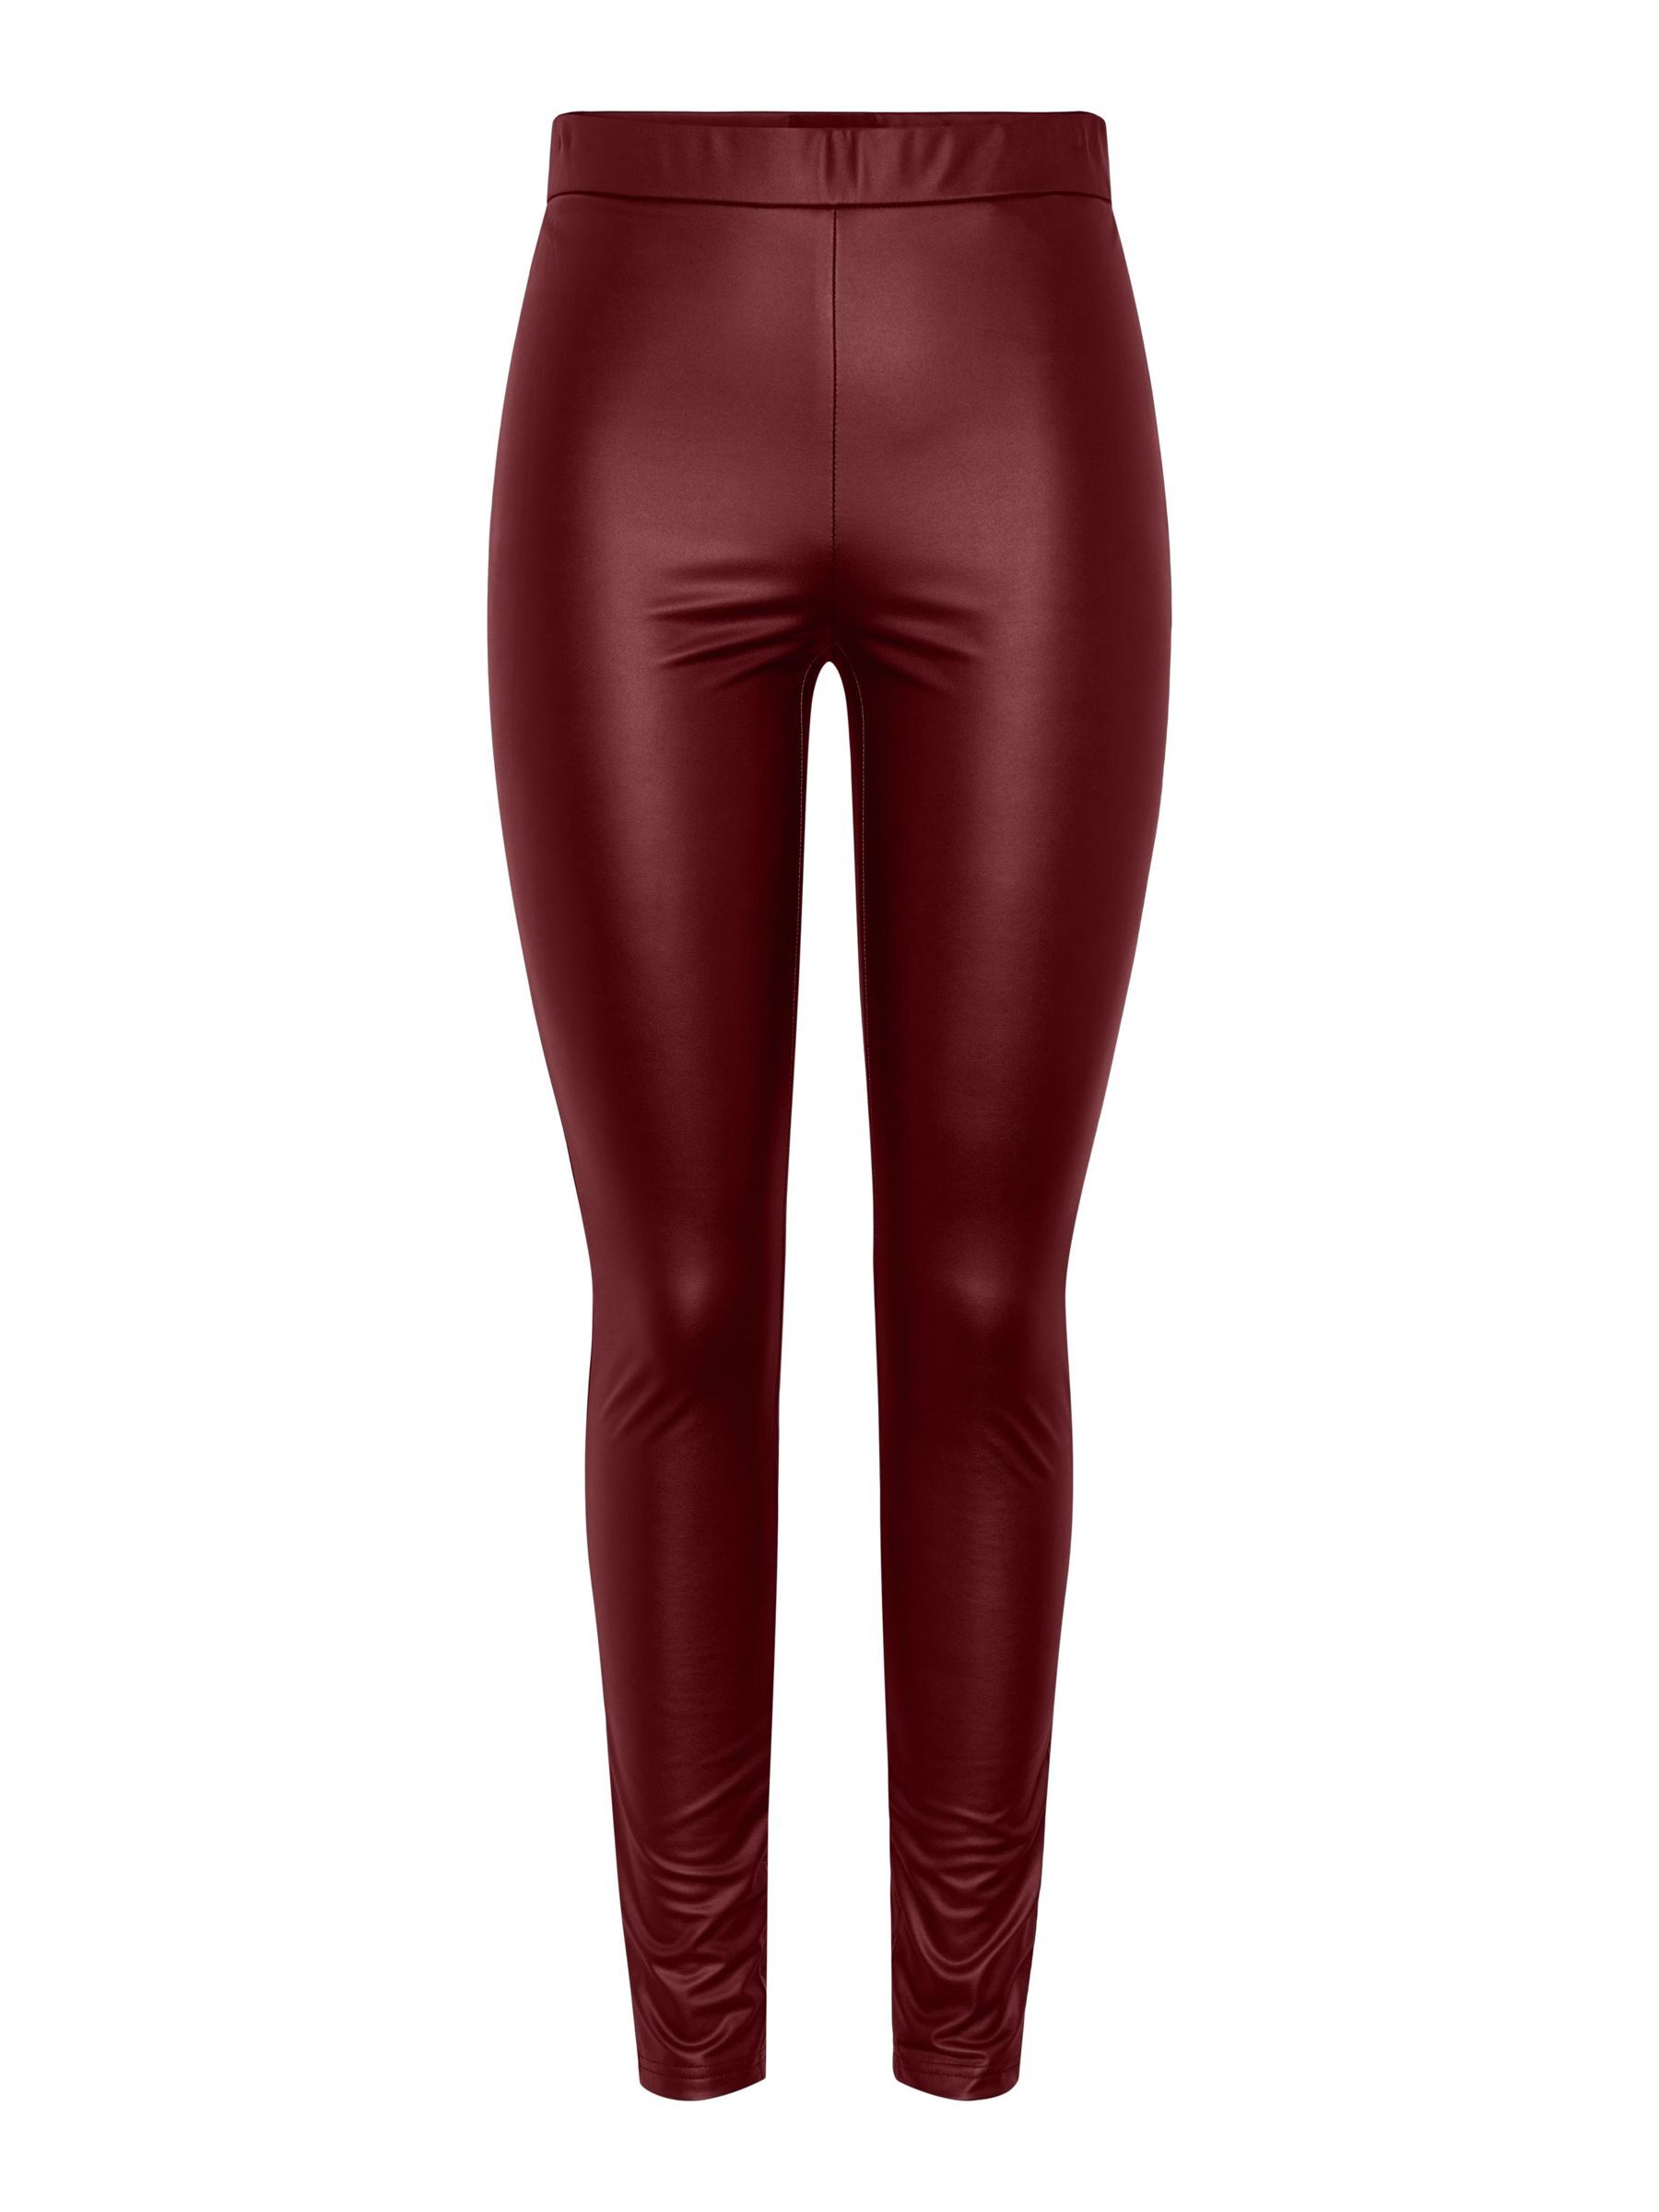 Extravagant Vegan Leather Pants for Women, High Waist, Red Leather Pants,  Slime Pants, Black Pants, Leather Leggings, White Leather Pants, - Etsy  Australia